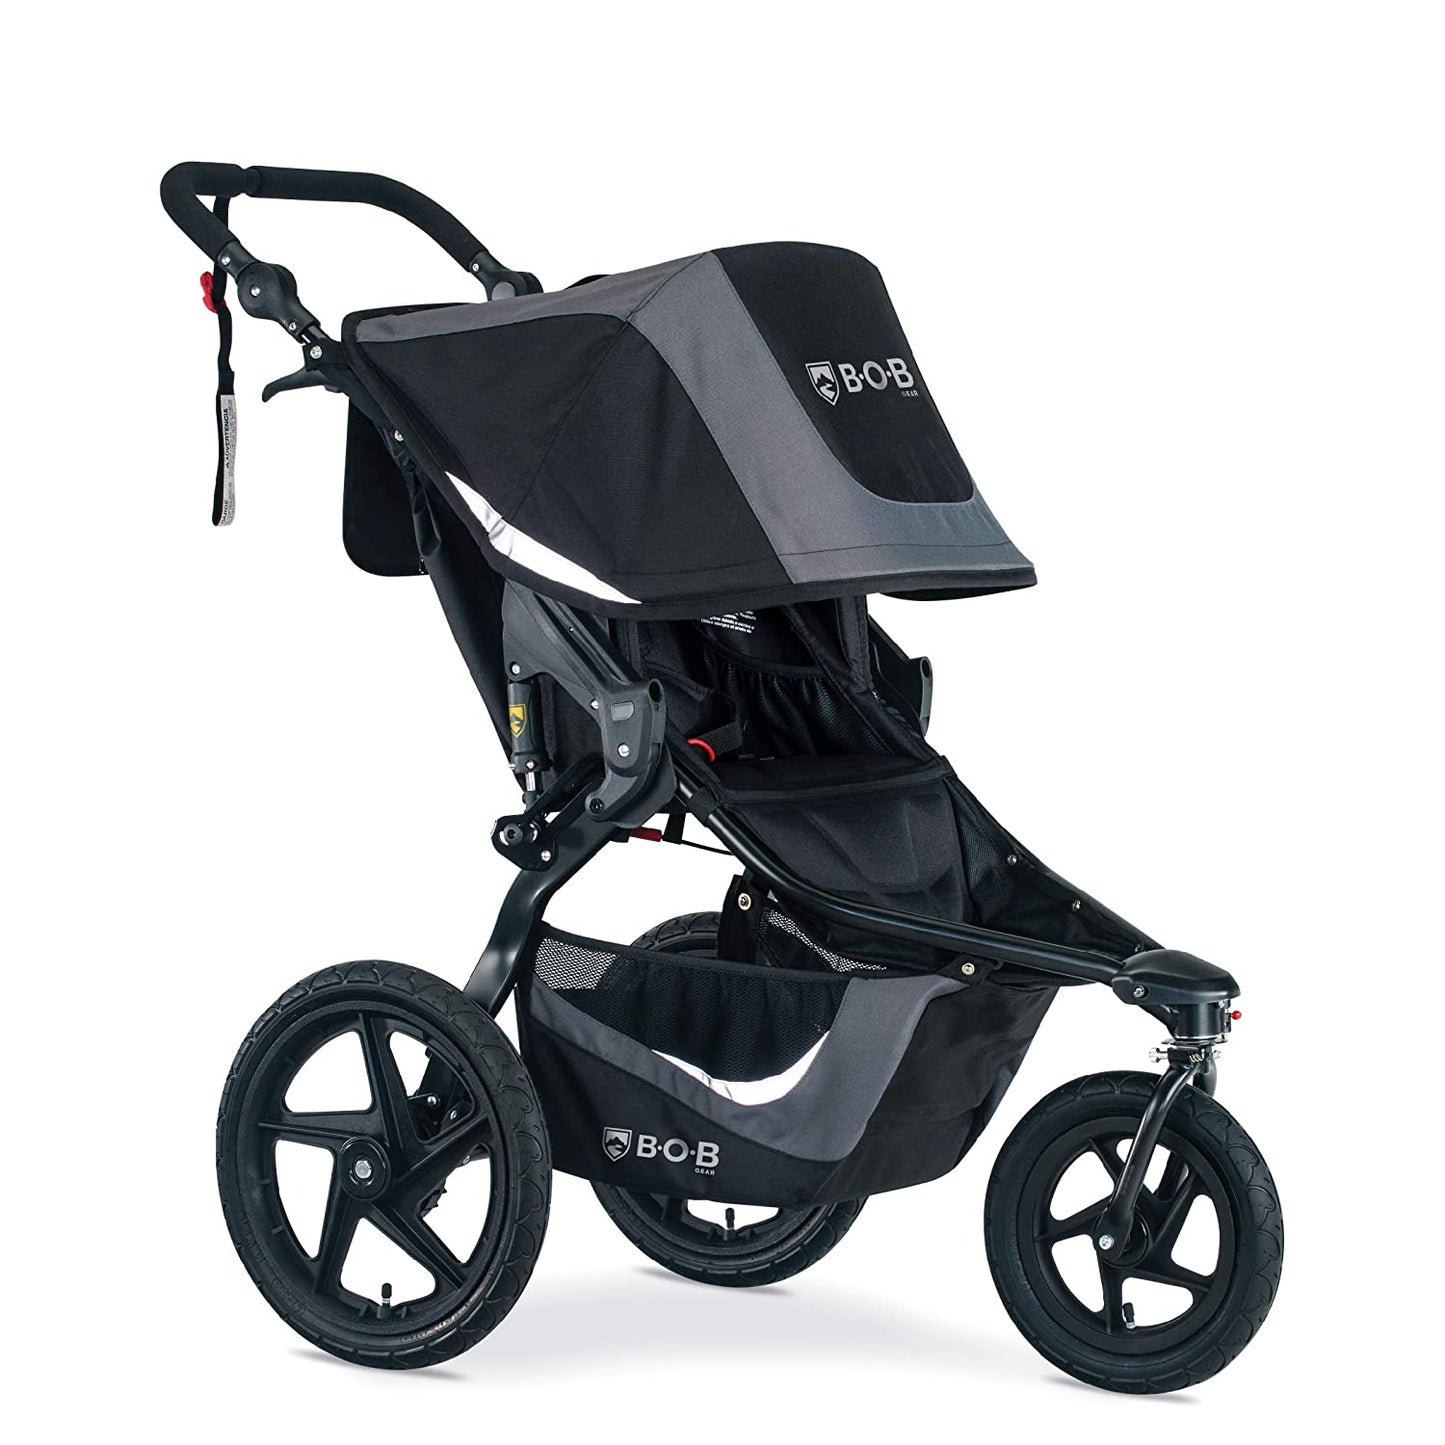 Standard Baby Stroller rental near me